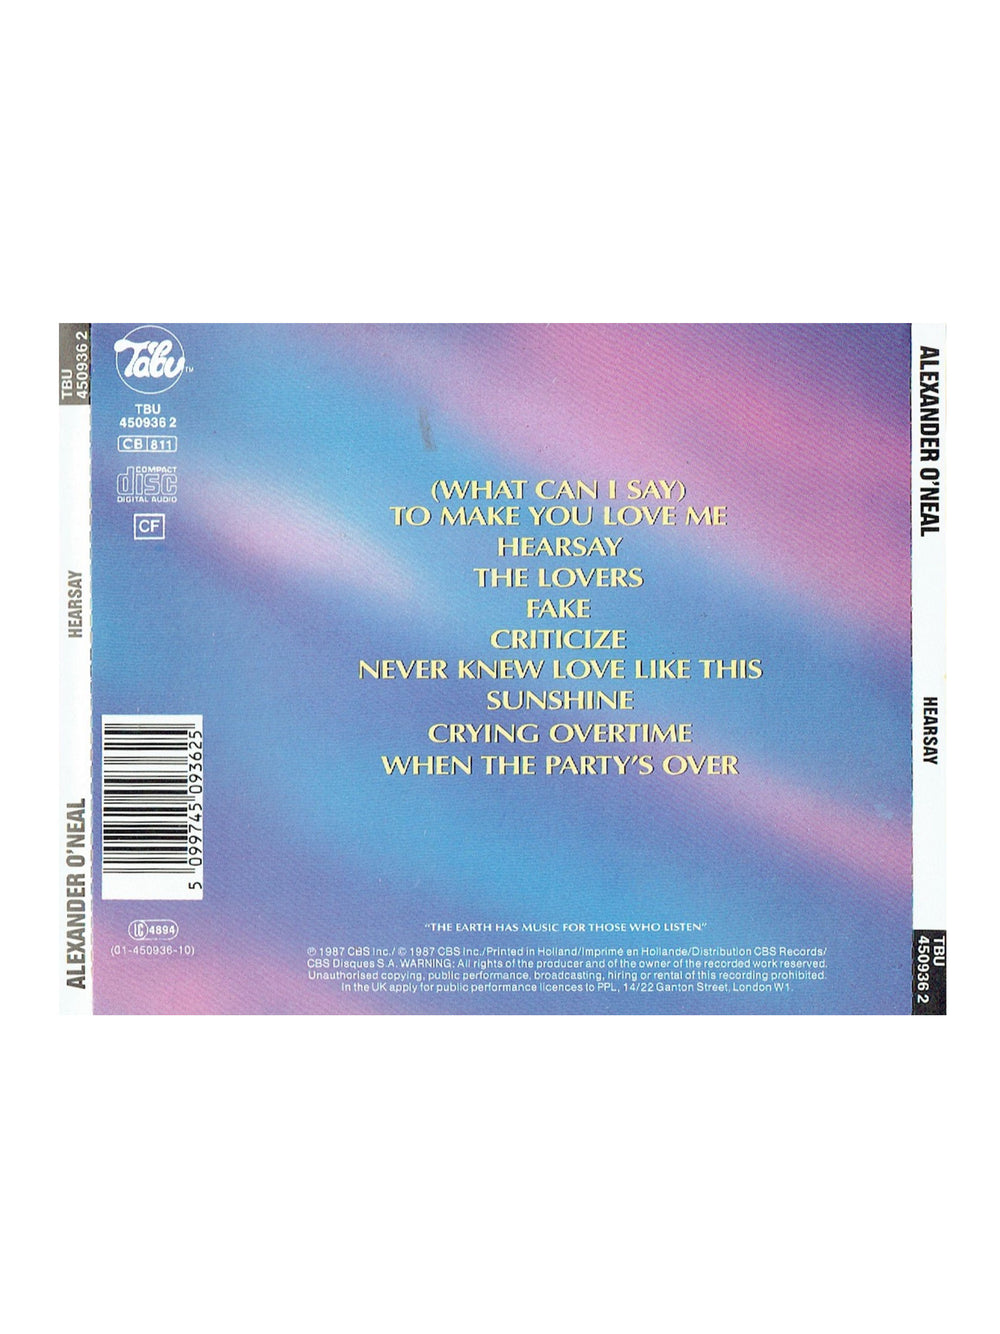 Prince – Alexander O'Neal Hearsay CD Album Original 1987 Release Jam & Lewis Prince